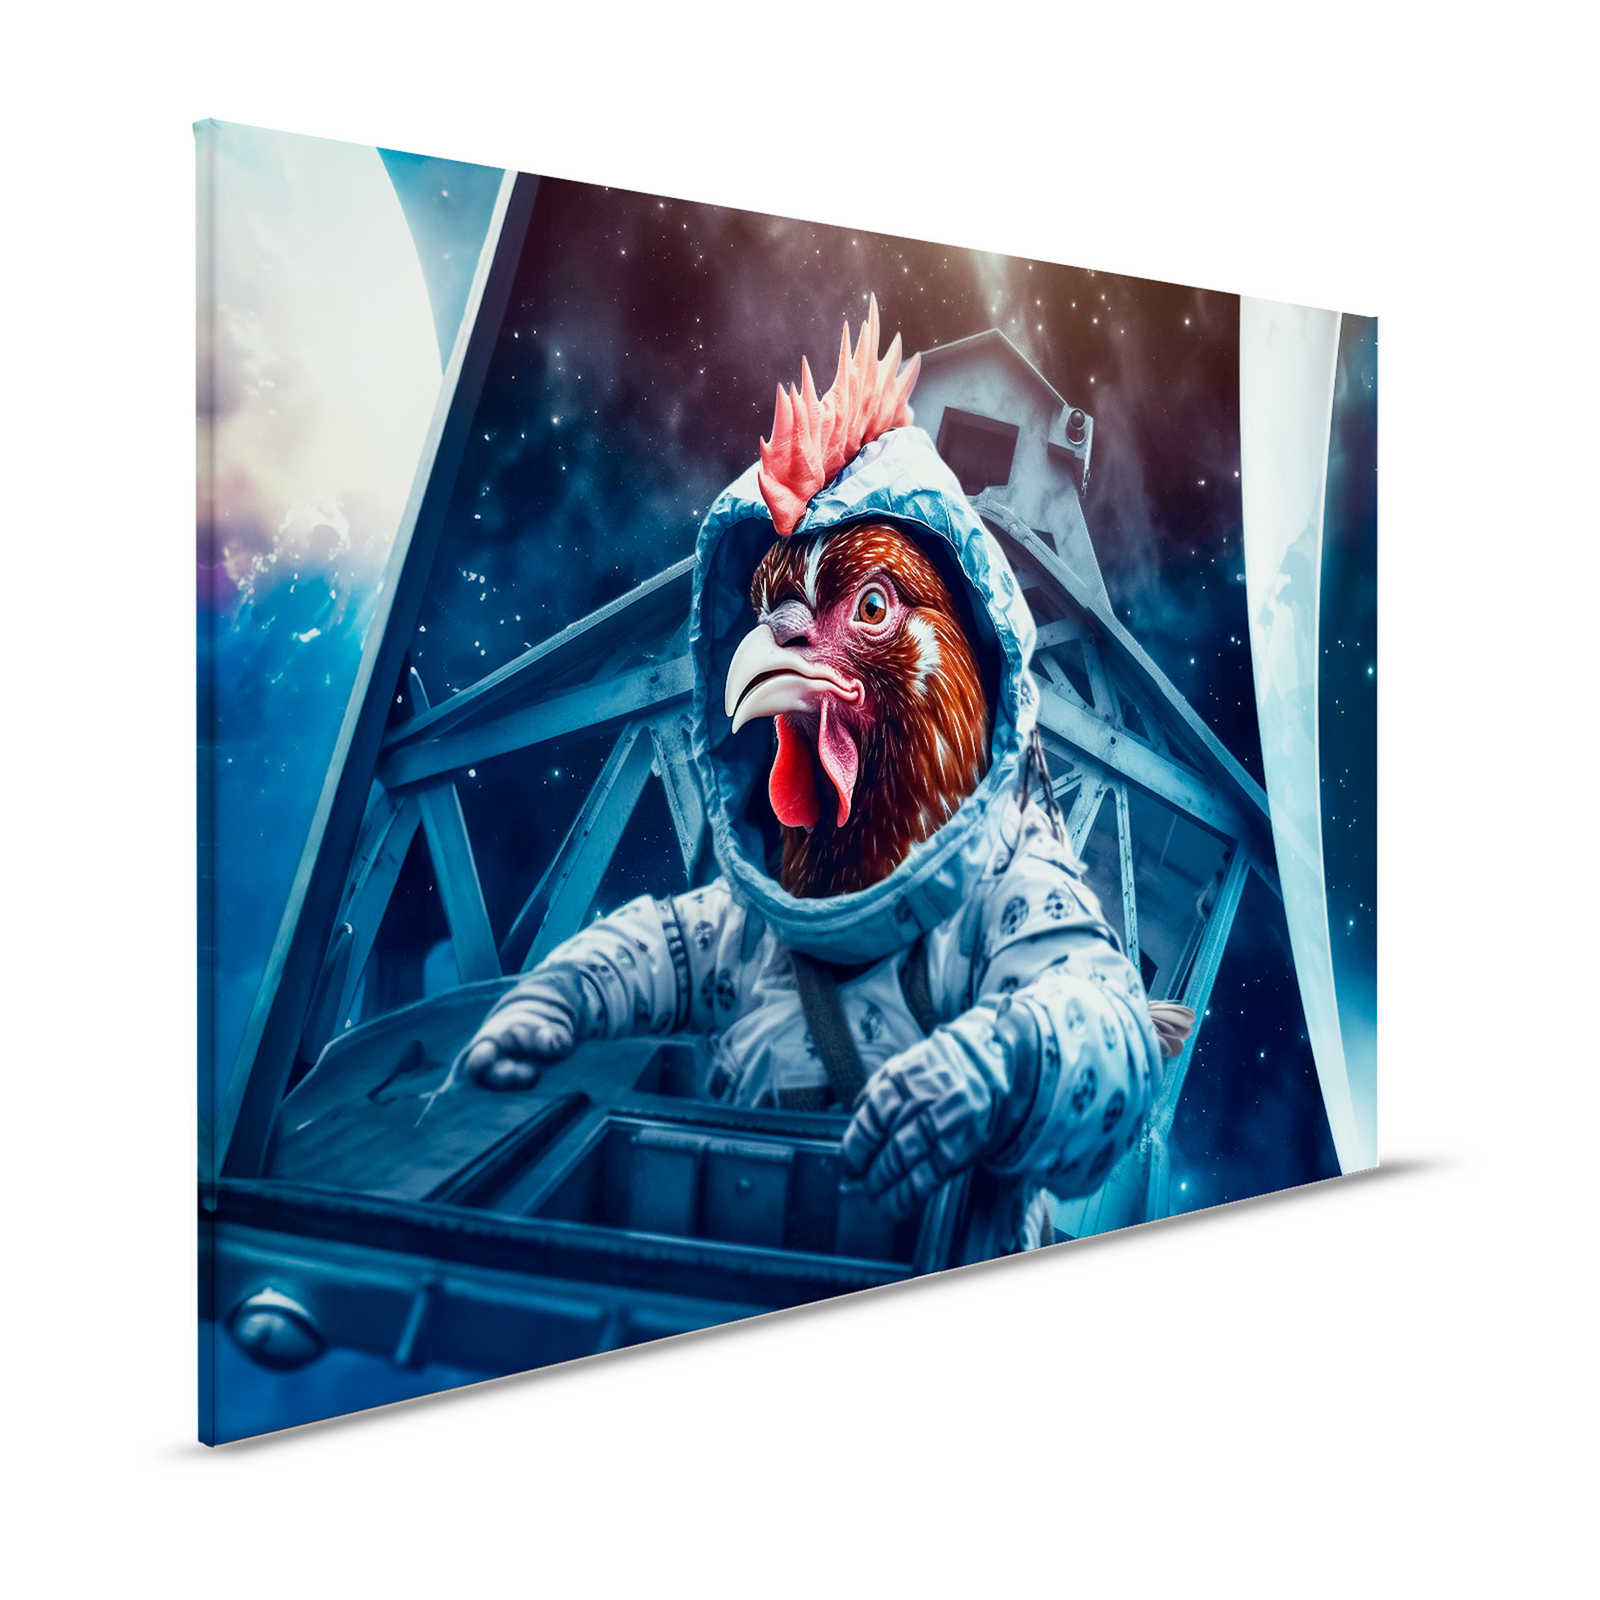 Toile KI »Space Chicken« - 120 cm x 80 cm
